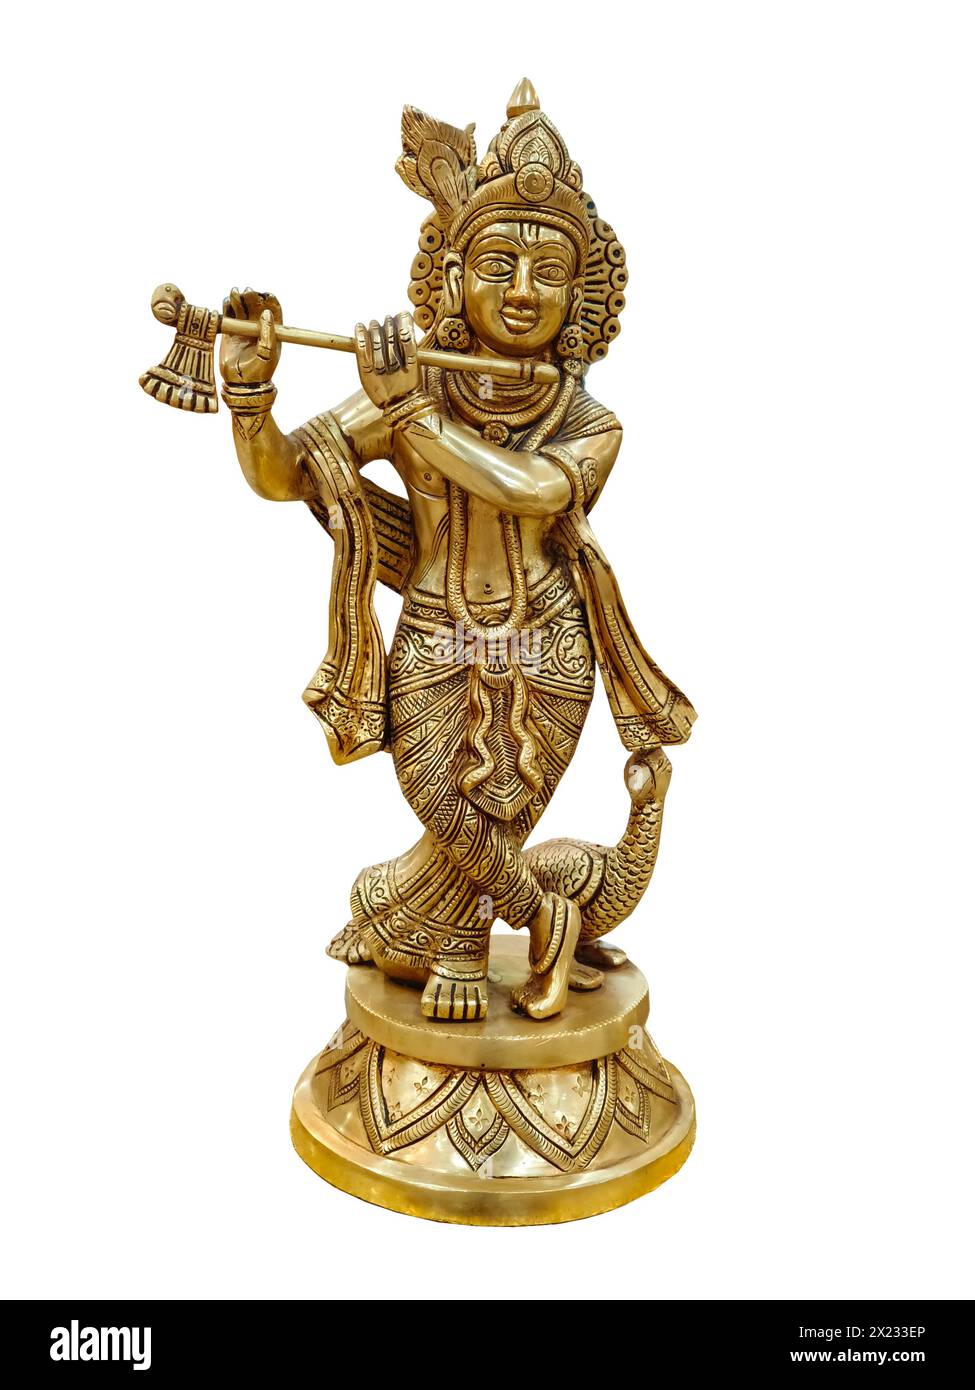 Krishna god Vishnu avatar brass statue isolated on background. Stock Photo